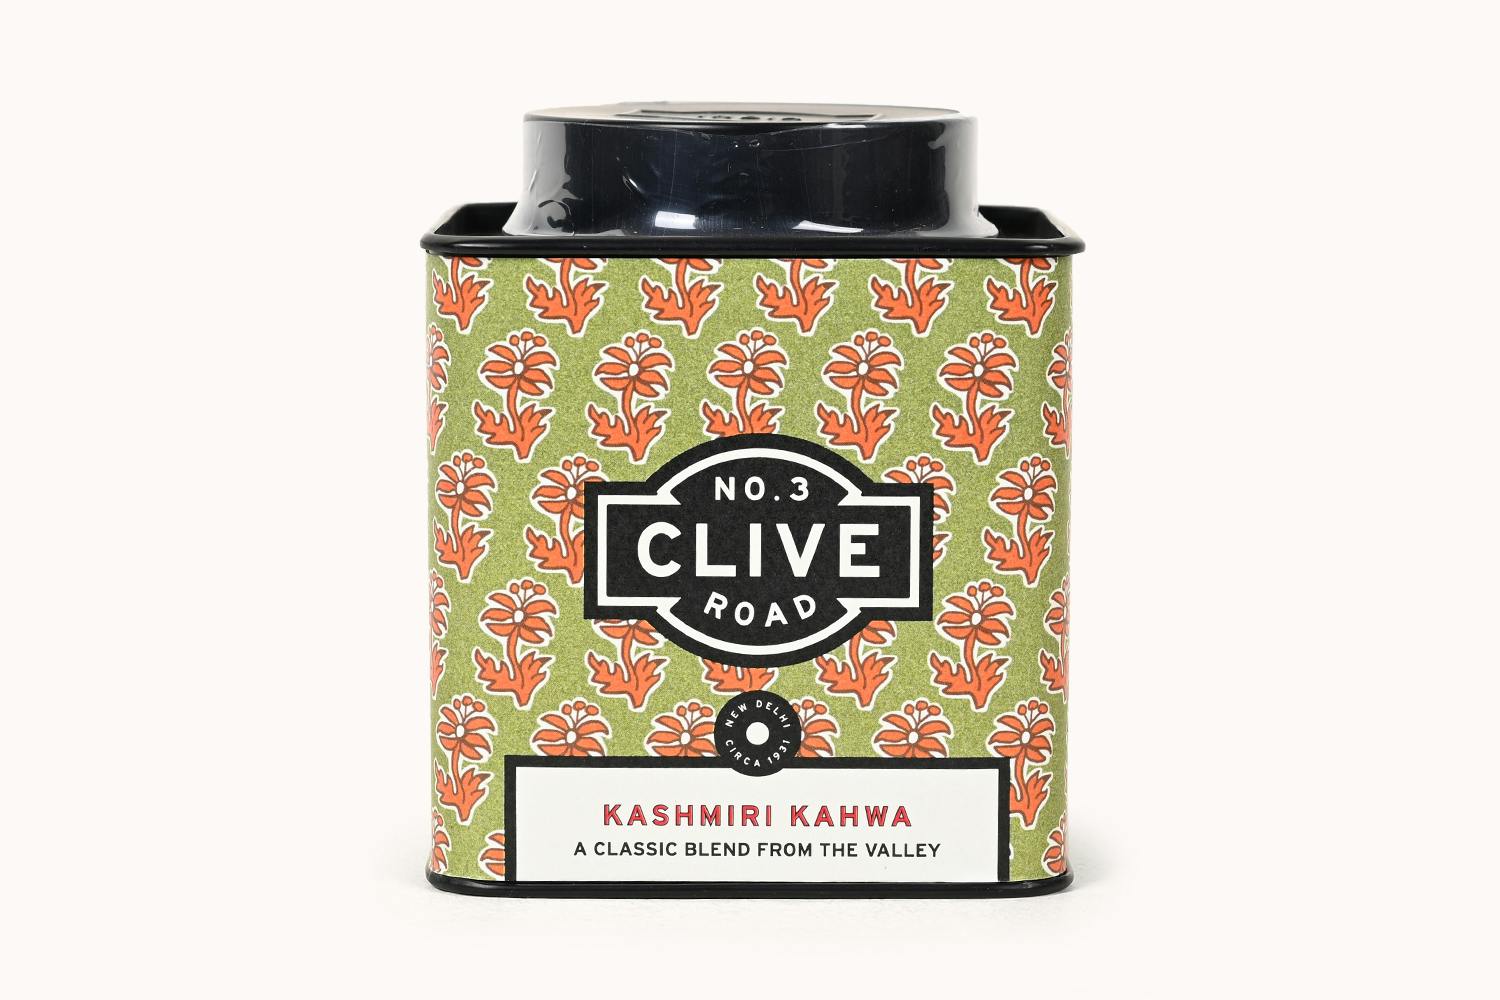 No. 3 Clive Road Kashmiri Kahwa Green Tea Blend